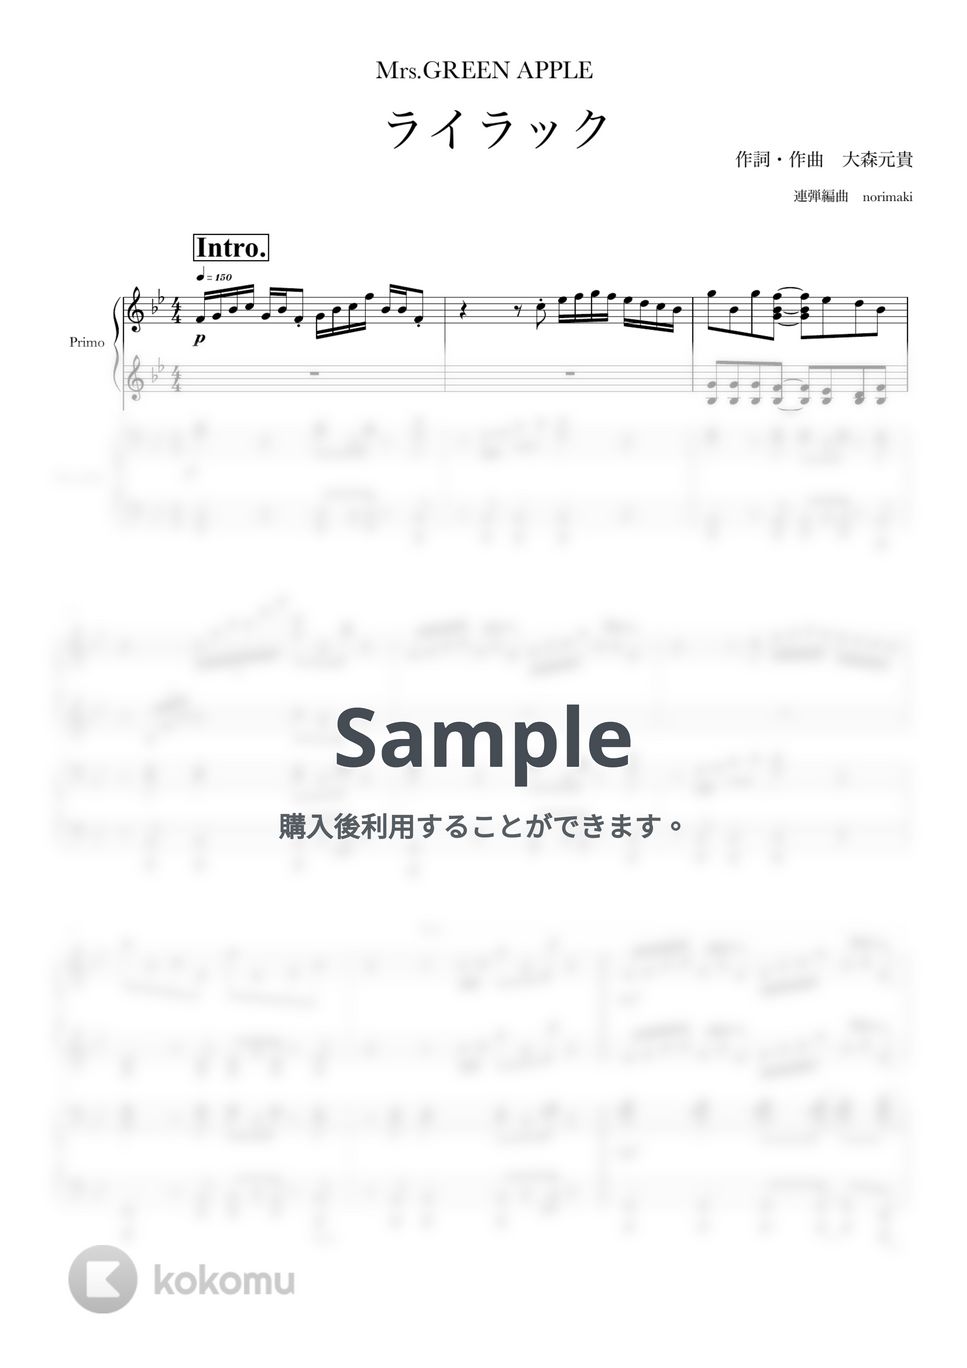 Mrs. GREEN APPLE - ライラック (ピアノ連弾) by norimaki